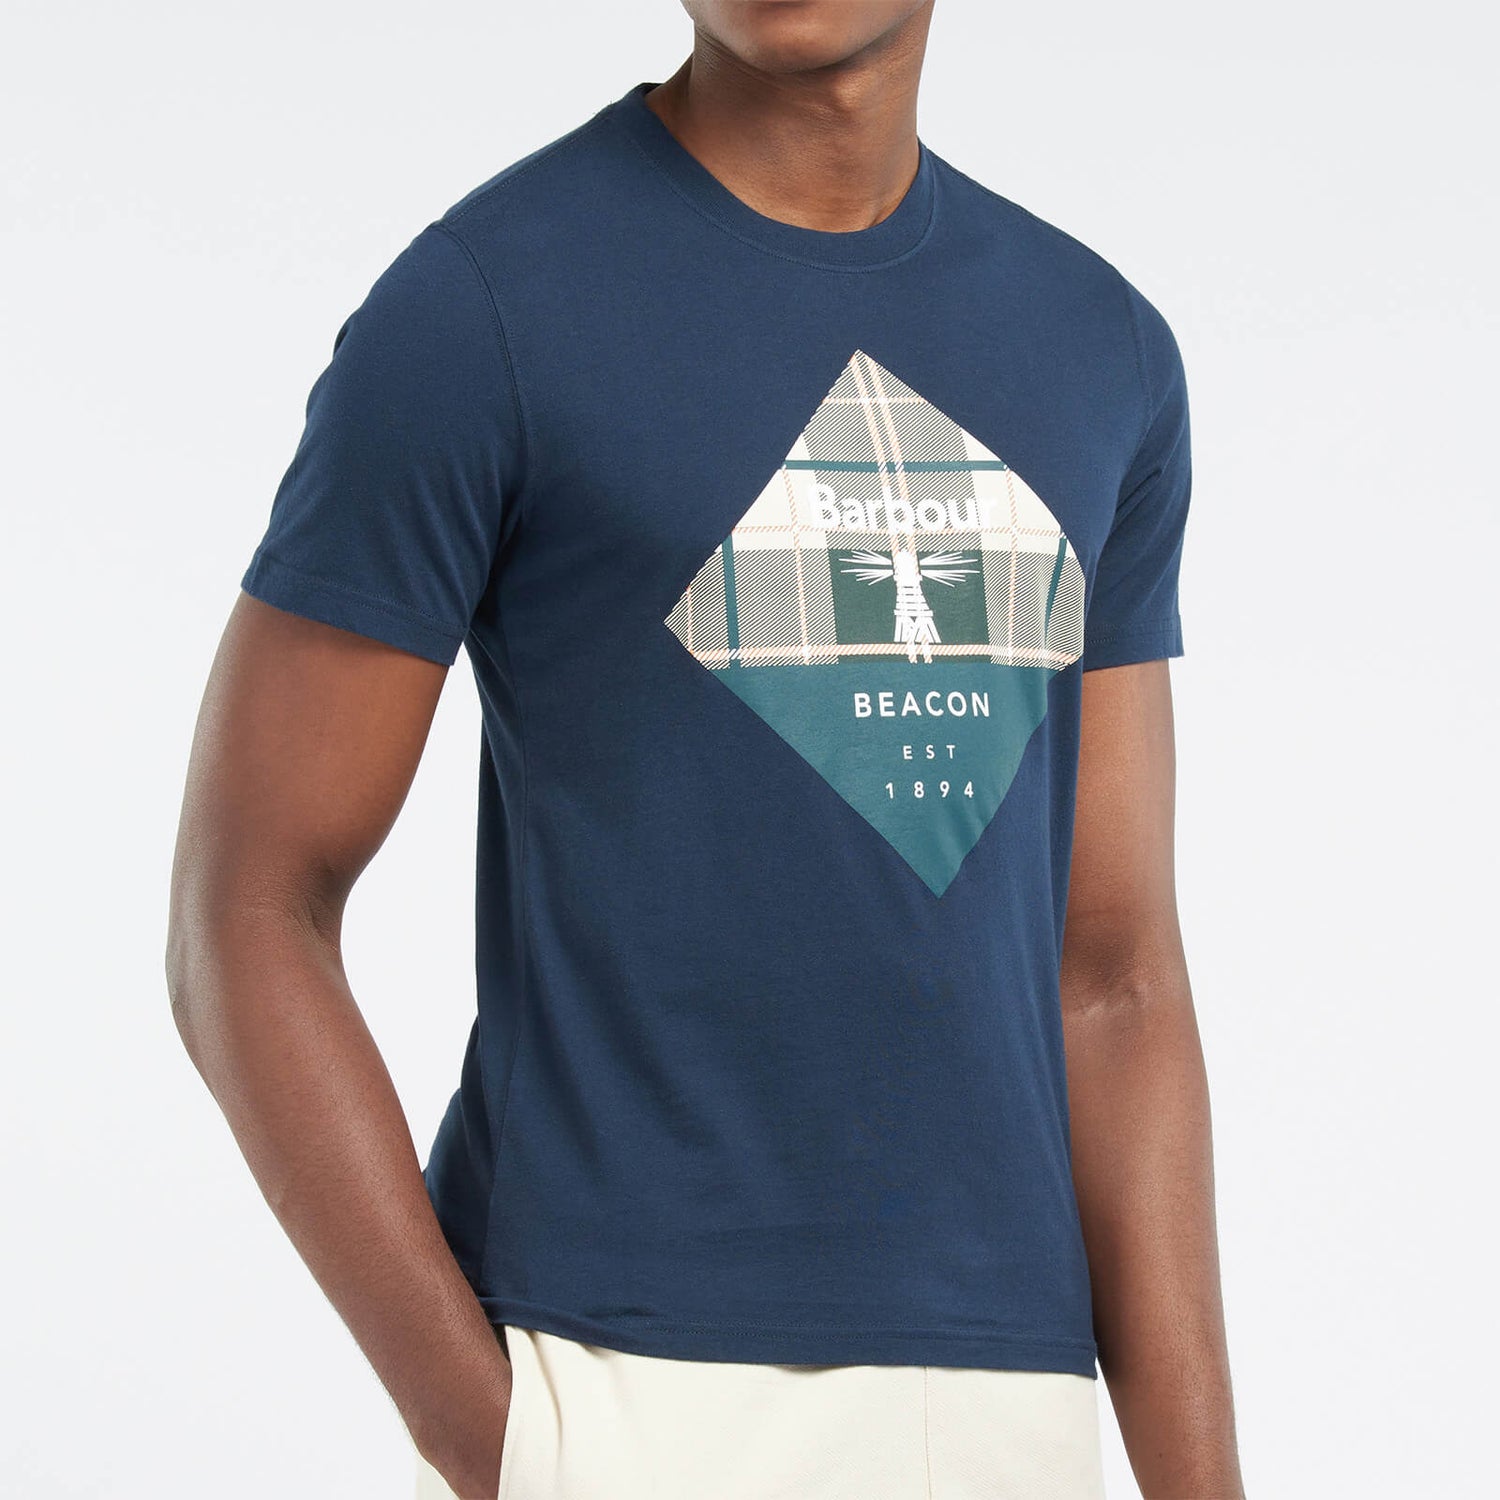 Barbour Beacon Men's Becker T-Shirt - Navy/Ancient - S